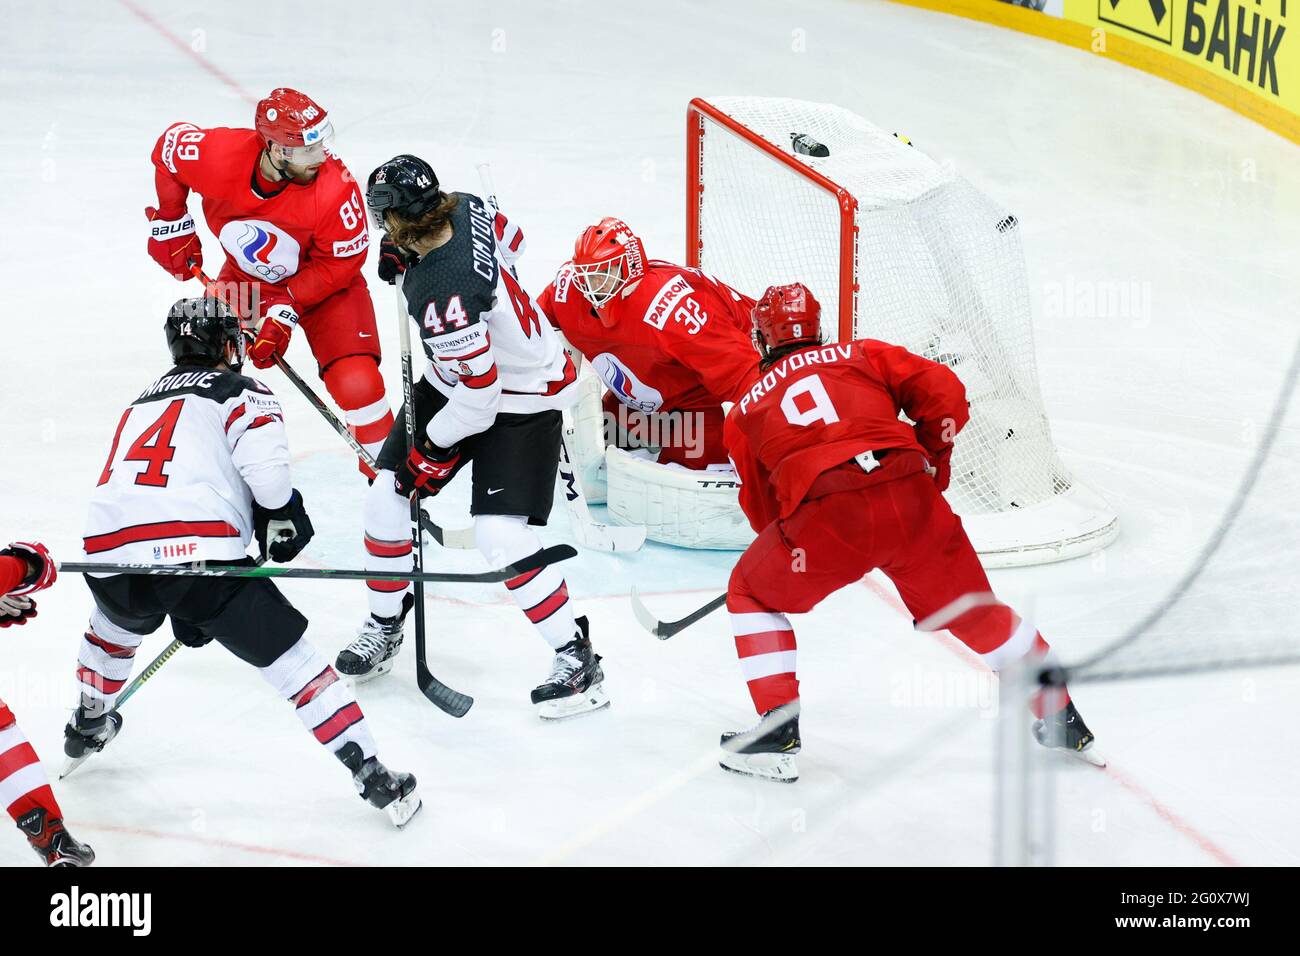 Riga, Olympic Sports Centre, Quarterfinal, Russia. 03rd June, 2021. Canada (2021 IIHF Ice Hockey World Championship), power play goal for Team Canada